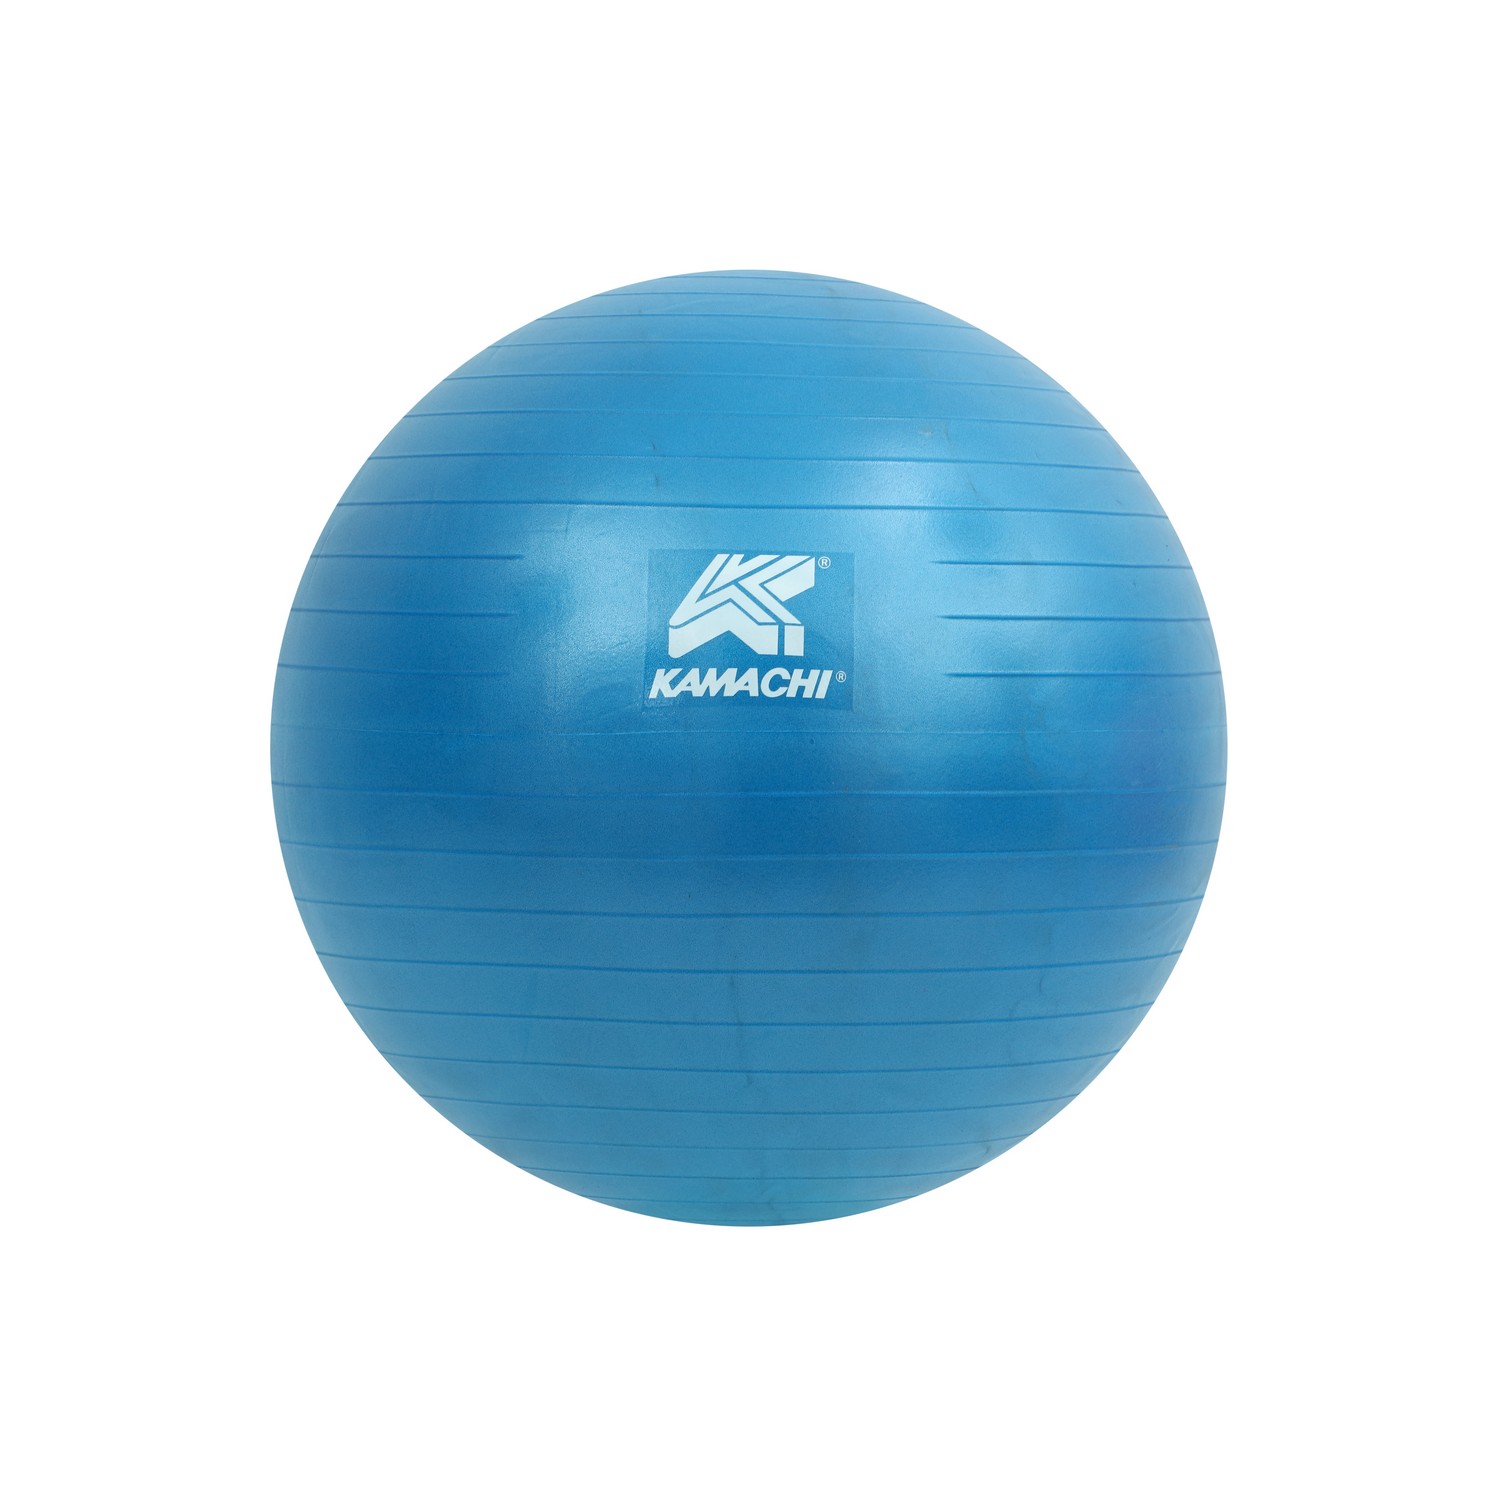 Kamachi 85 Cms Gym Ball With Foot Pump - Blue